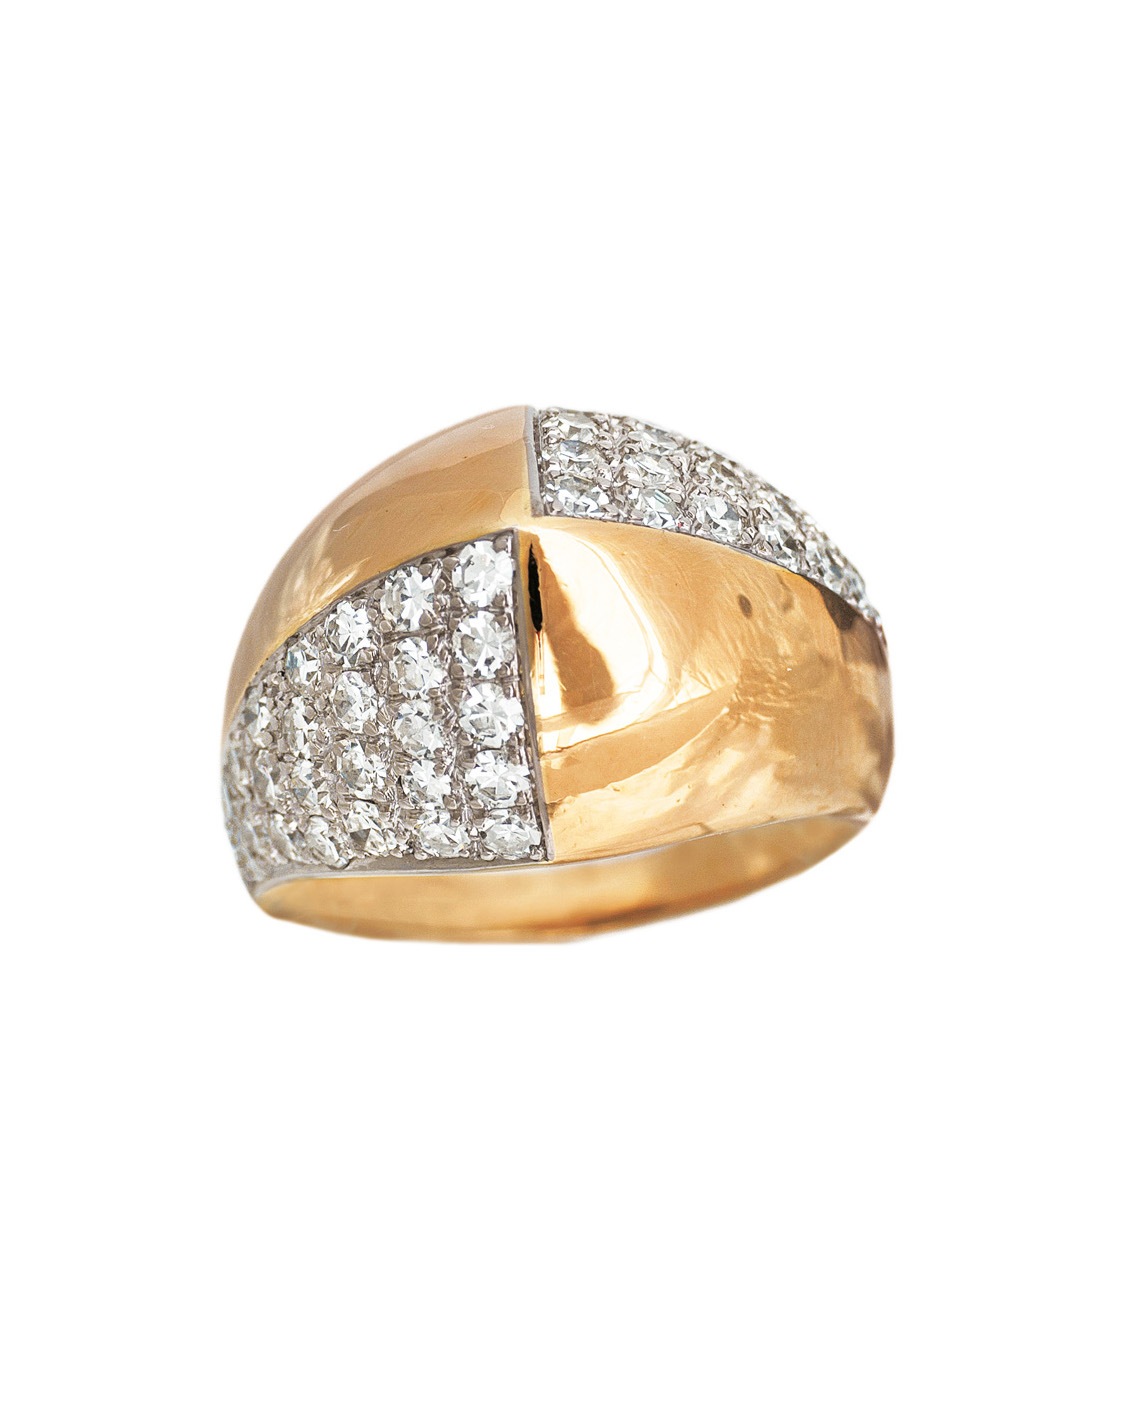 A modern diamond ring by Jeweller Schilling